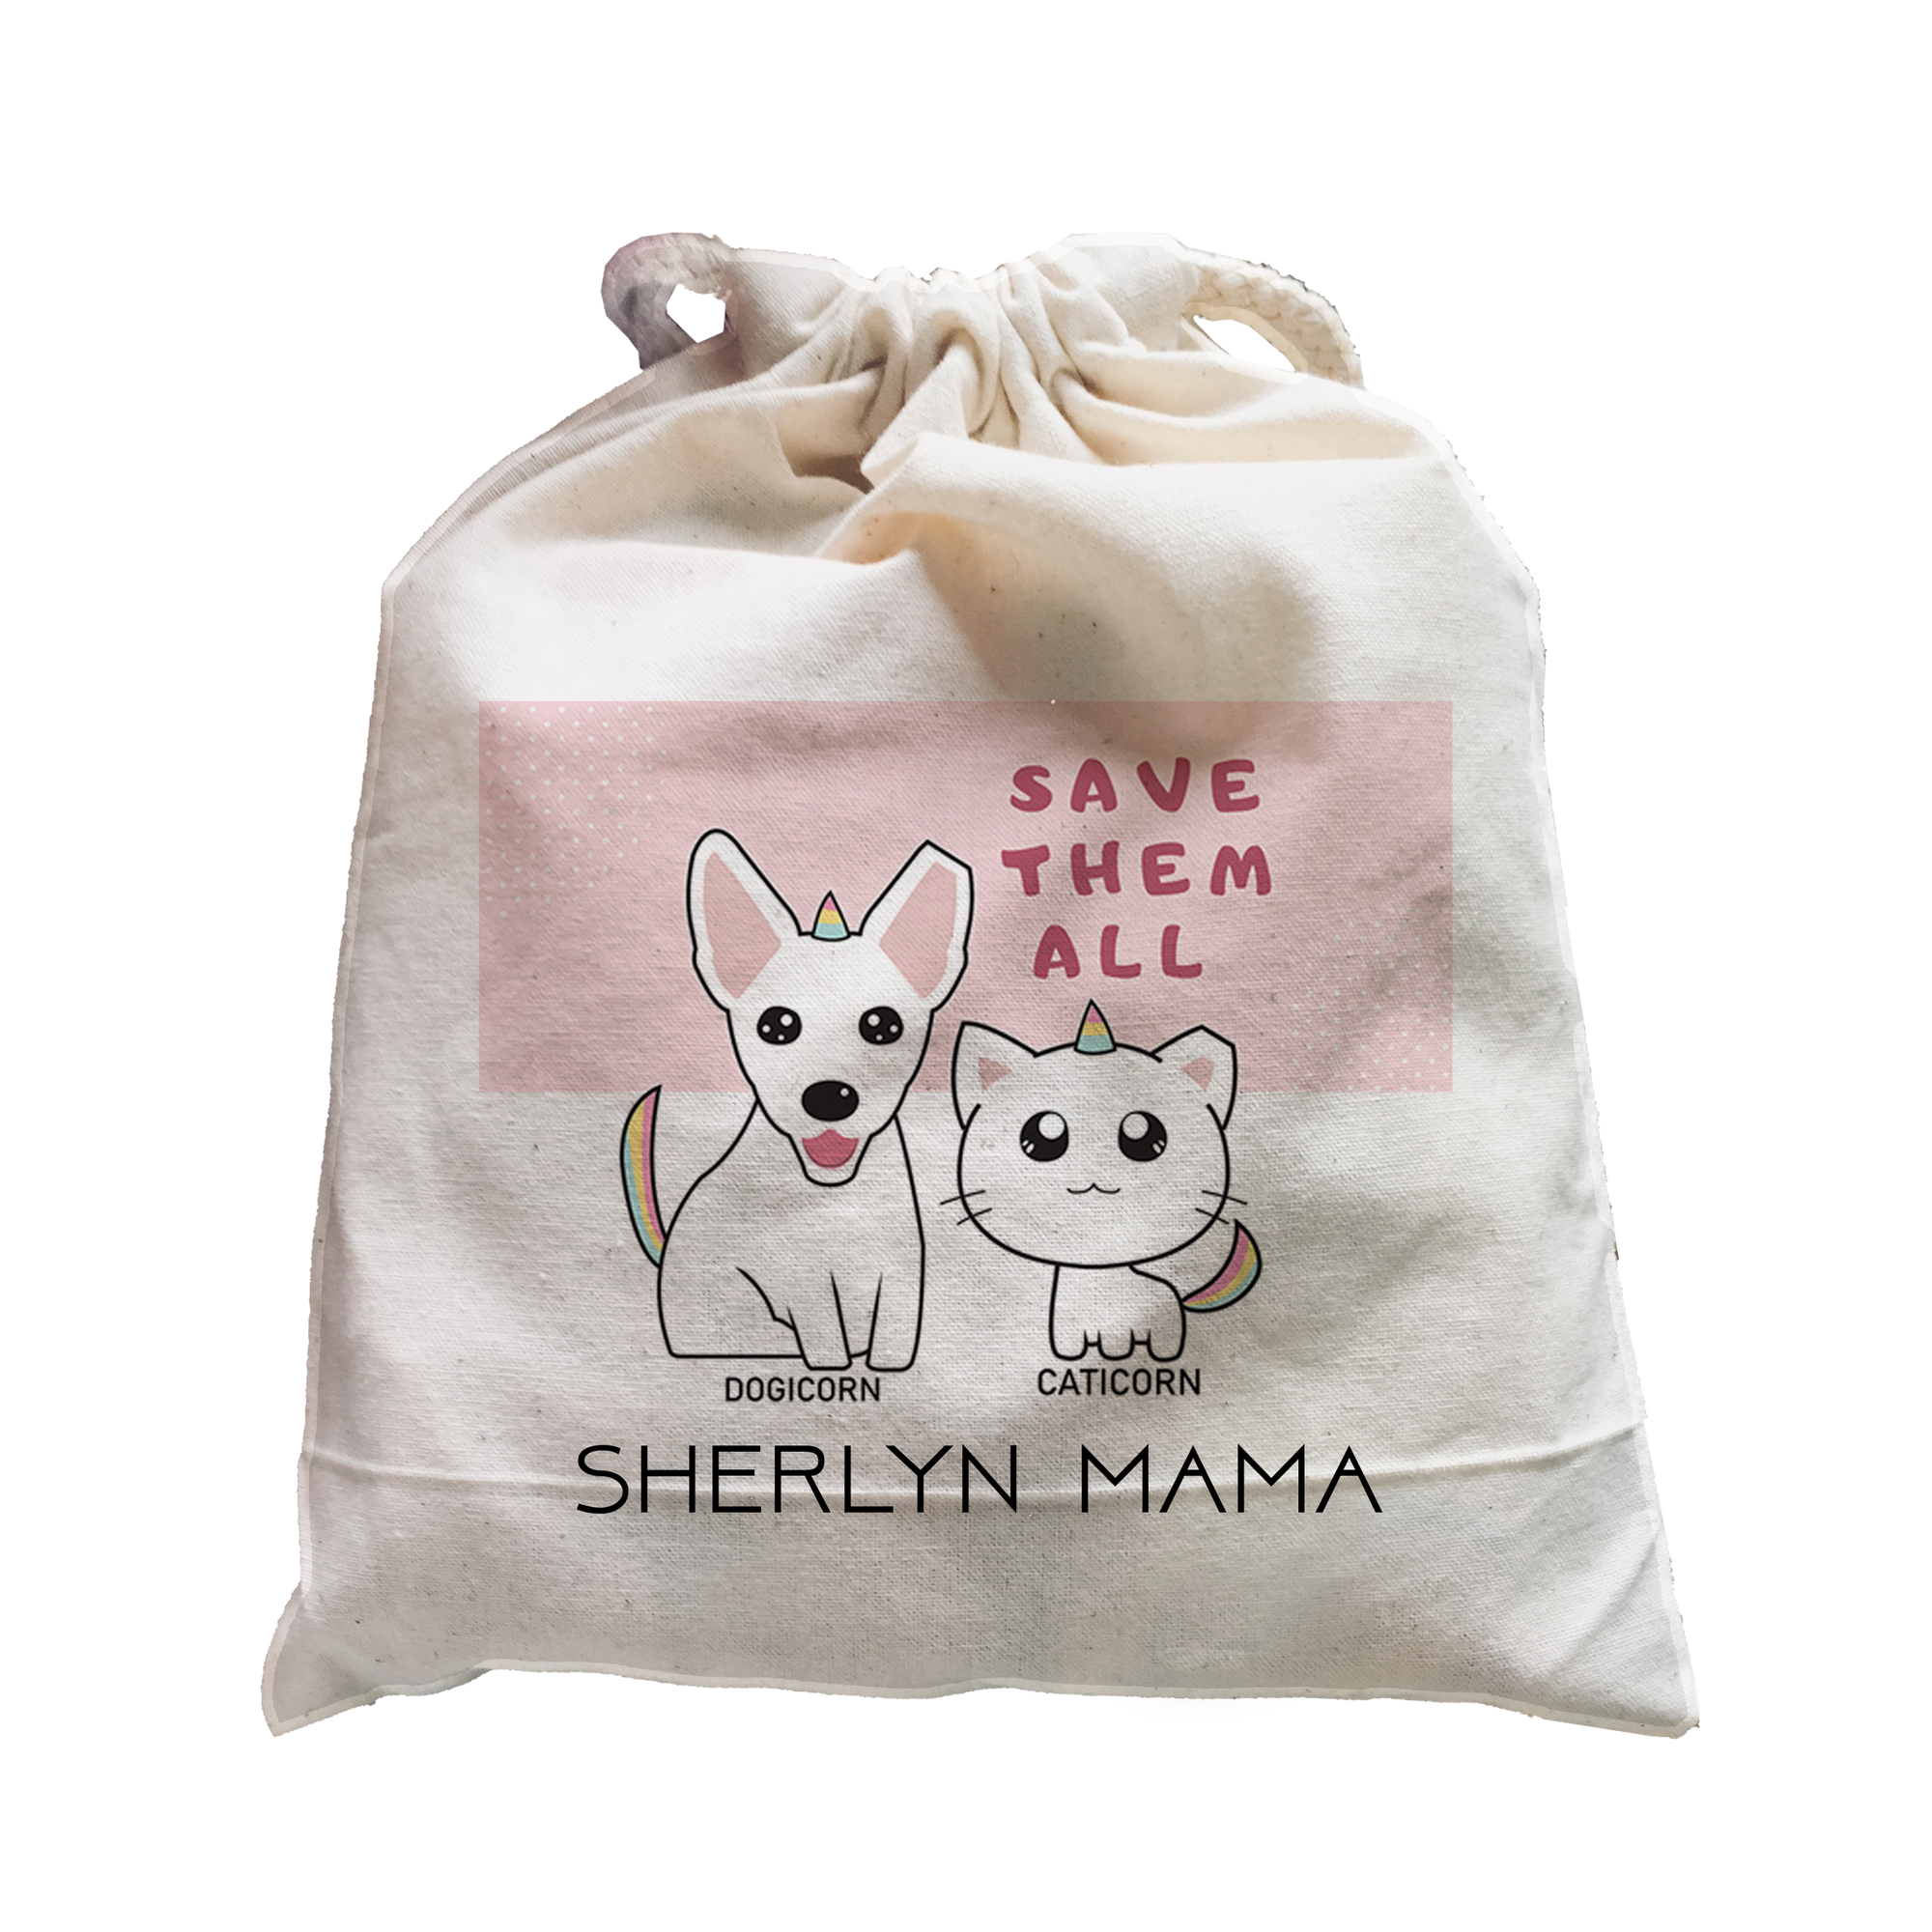 Sherlyn Mama Cute Mix Dogicorn and Caticorn Accessories Satchel